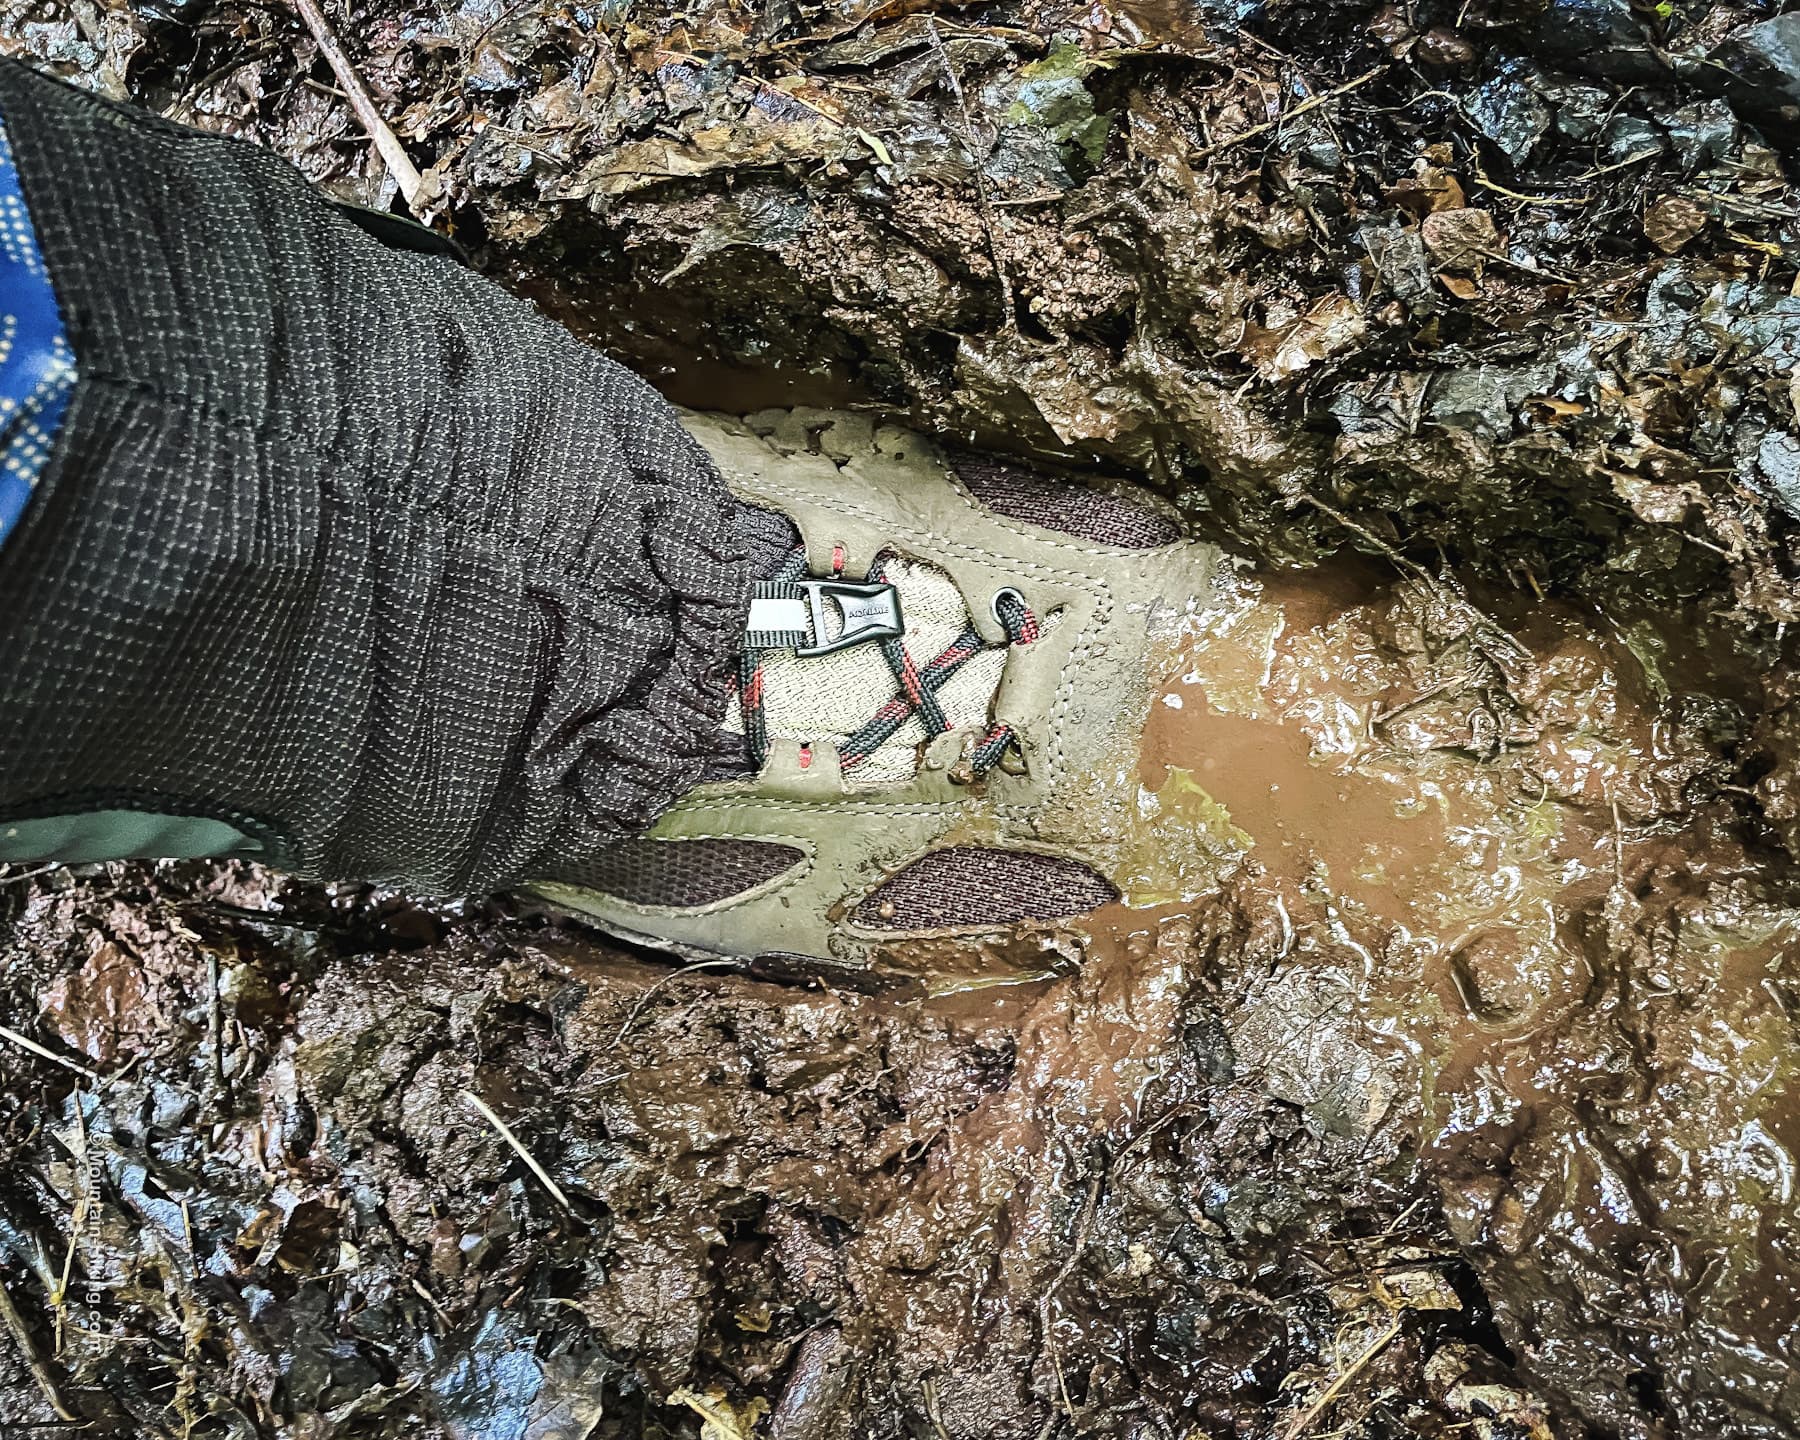 brand new hiking boot stuck deep in mud